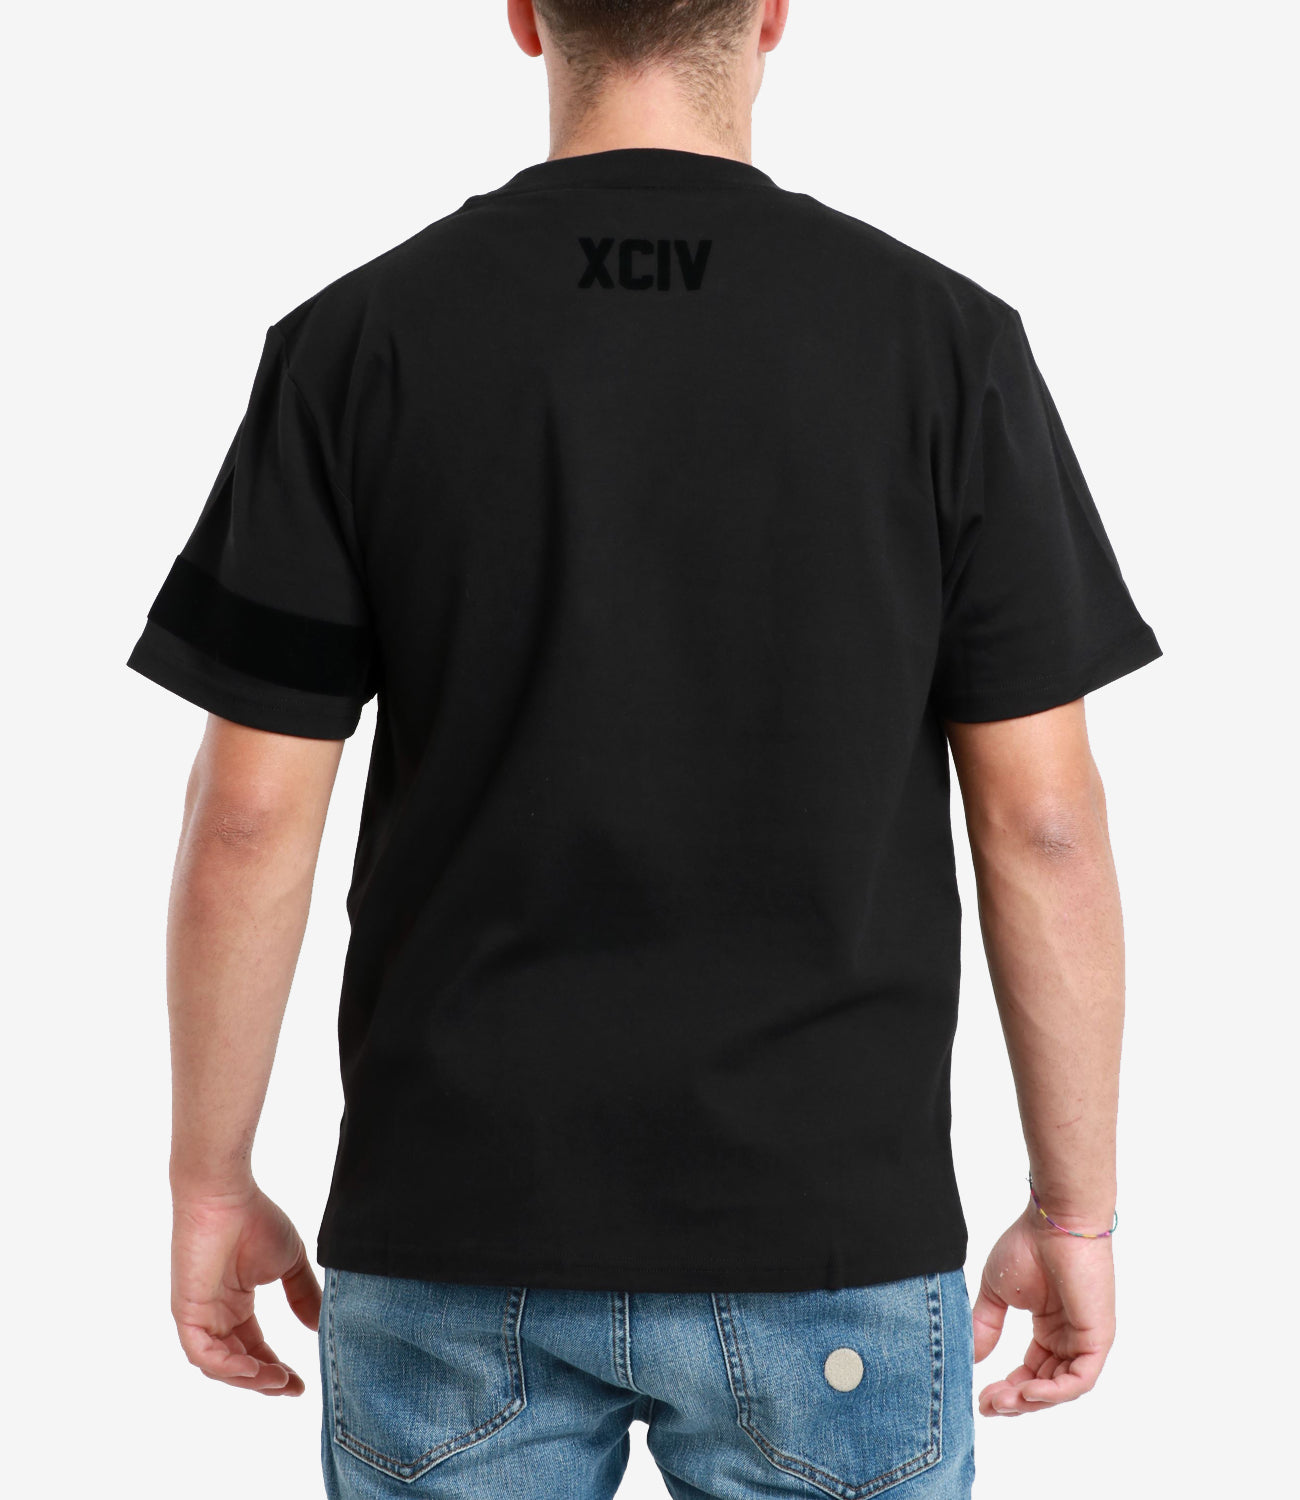 GCDS | T-Shirt Nero